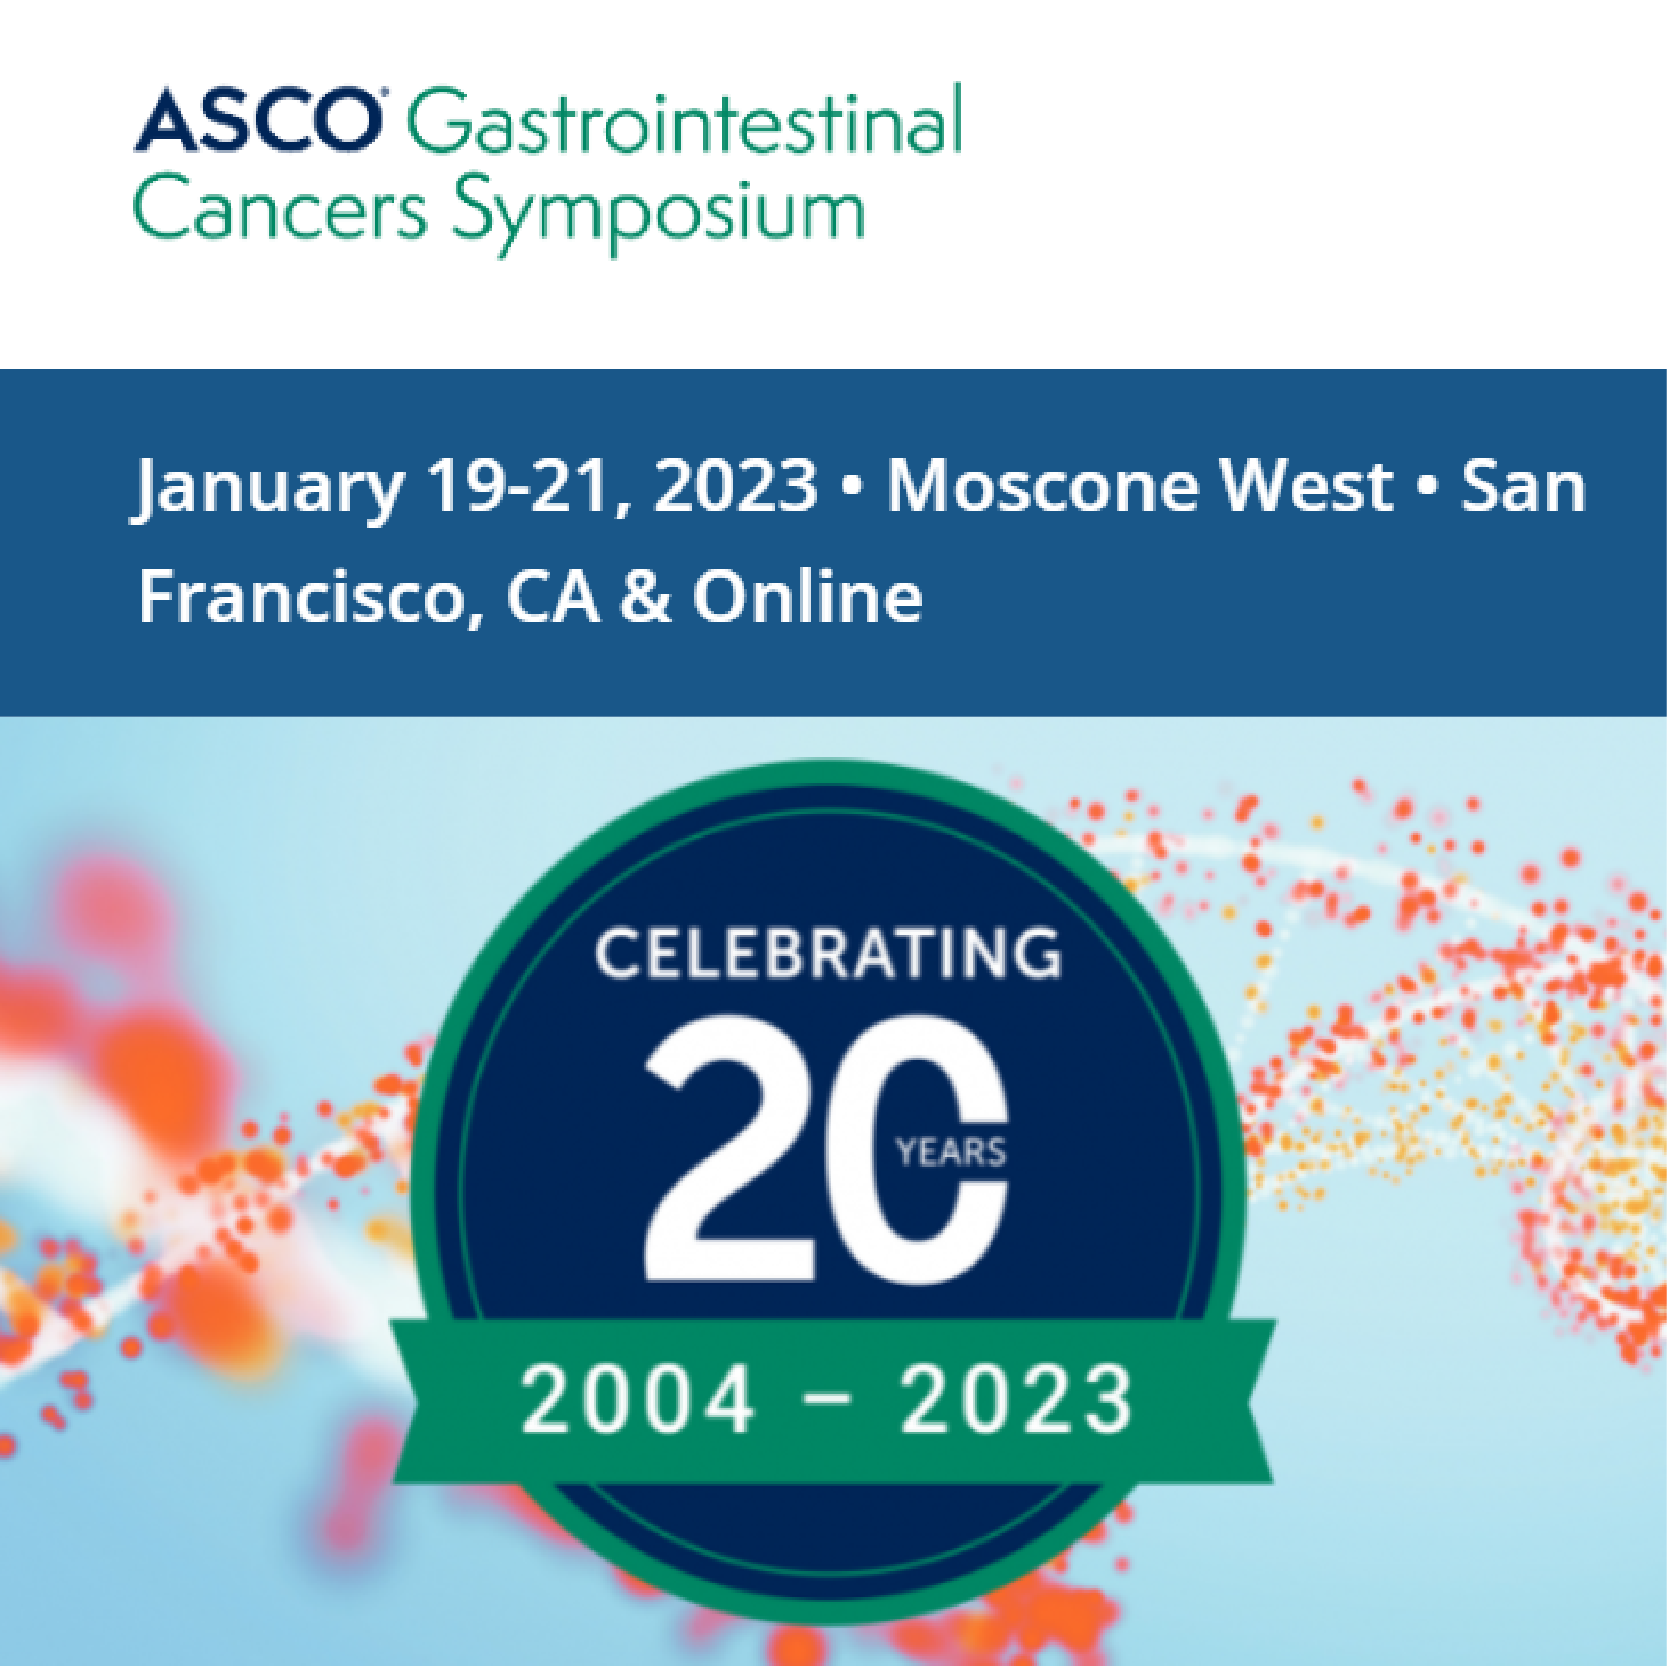 ASCO Gastrointestinal Cancers Symposium - ASCO 2023